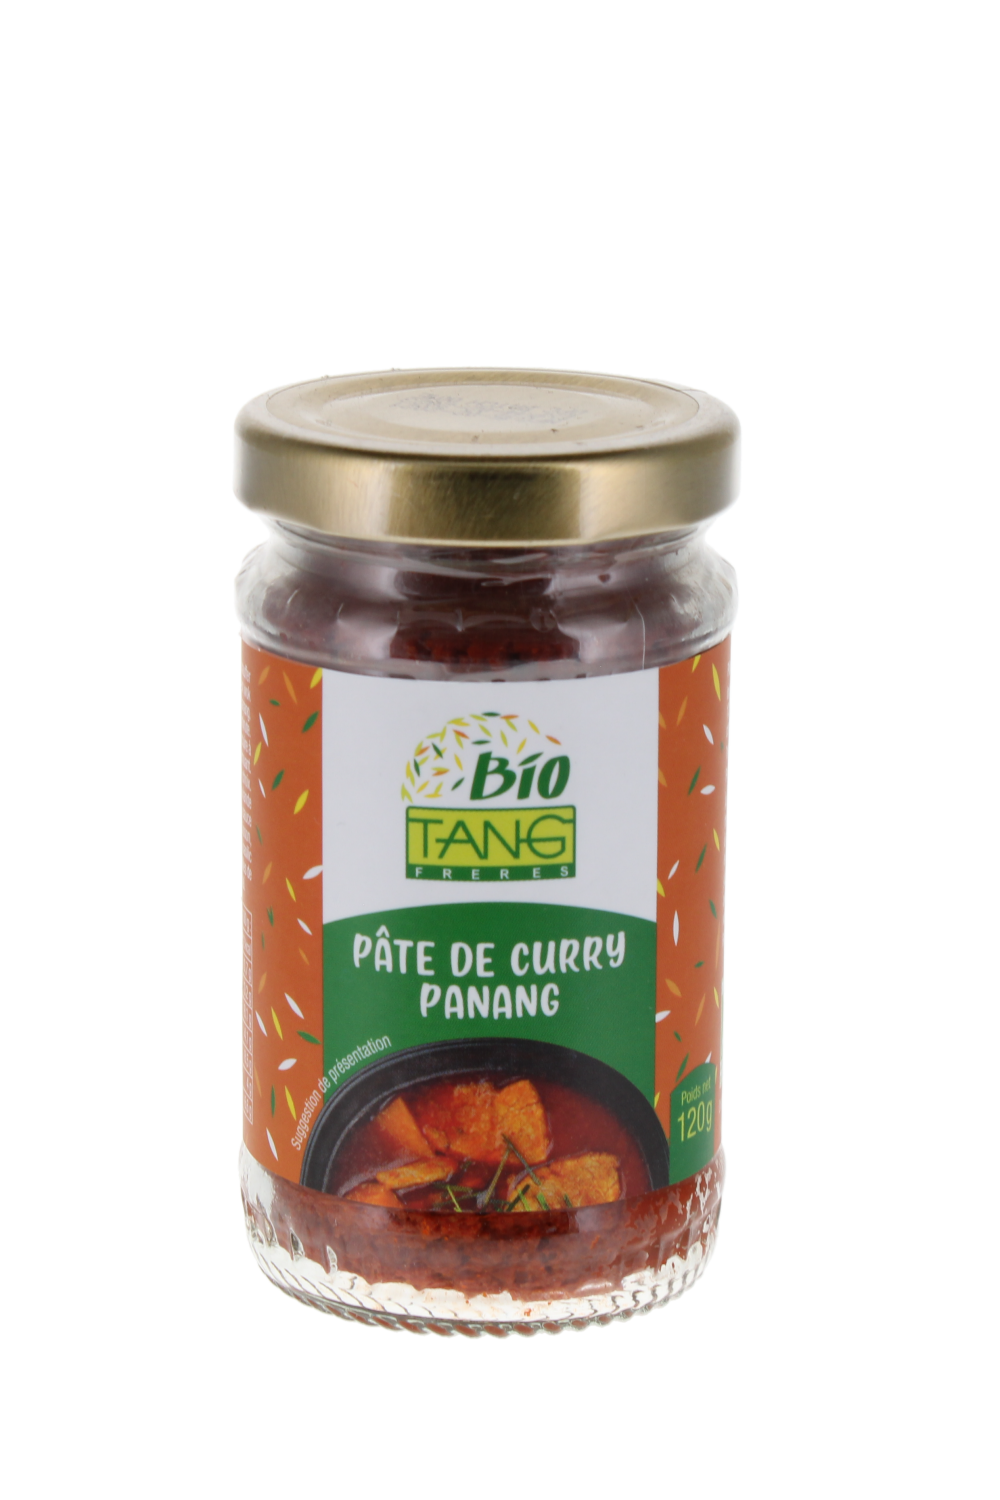 Pâte de curry panang (有机panang咖喱酱) (Générique) - Produits BIO, Sauces, Pâtes  de curry - Tang Frères